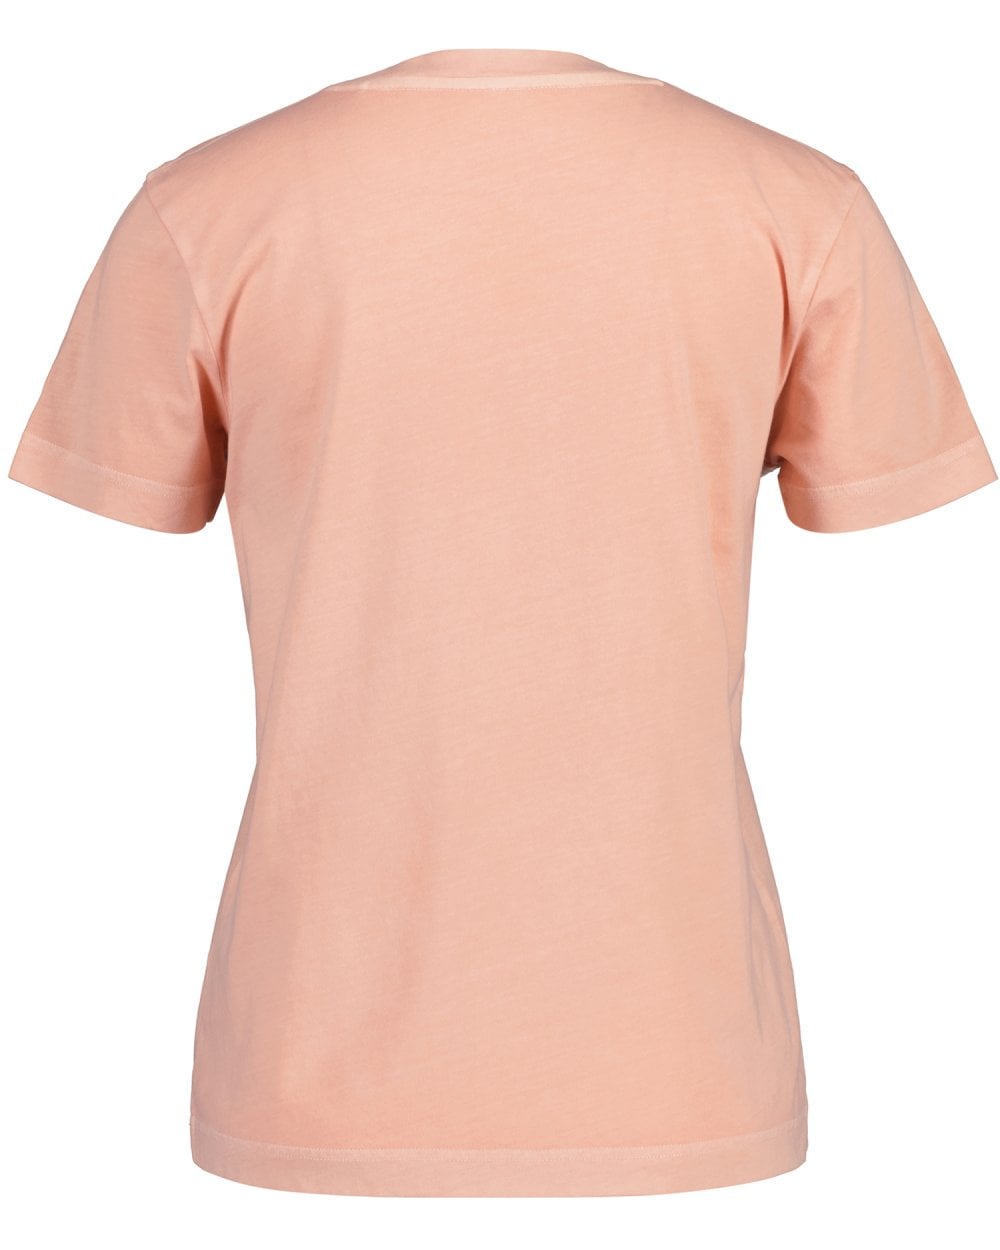 Sunfaded V-Neck T-Shirt